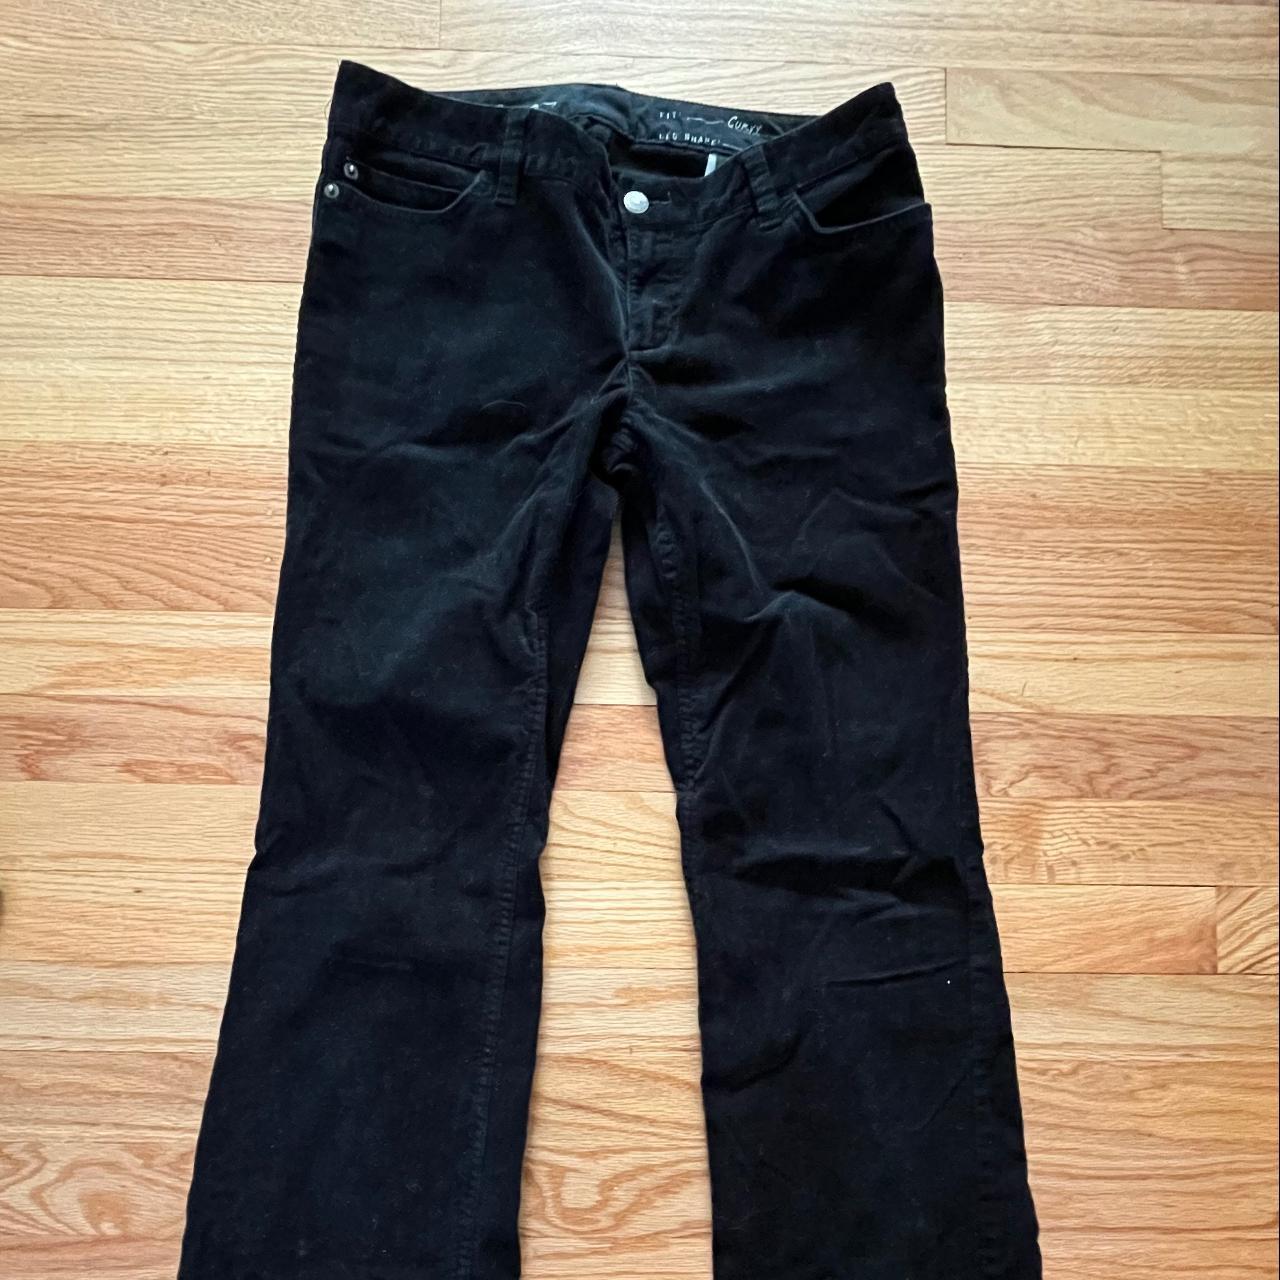 Low Rise Corduroy Jeans (repop) - 8in rise - 32in... - Depop